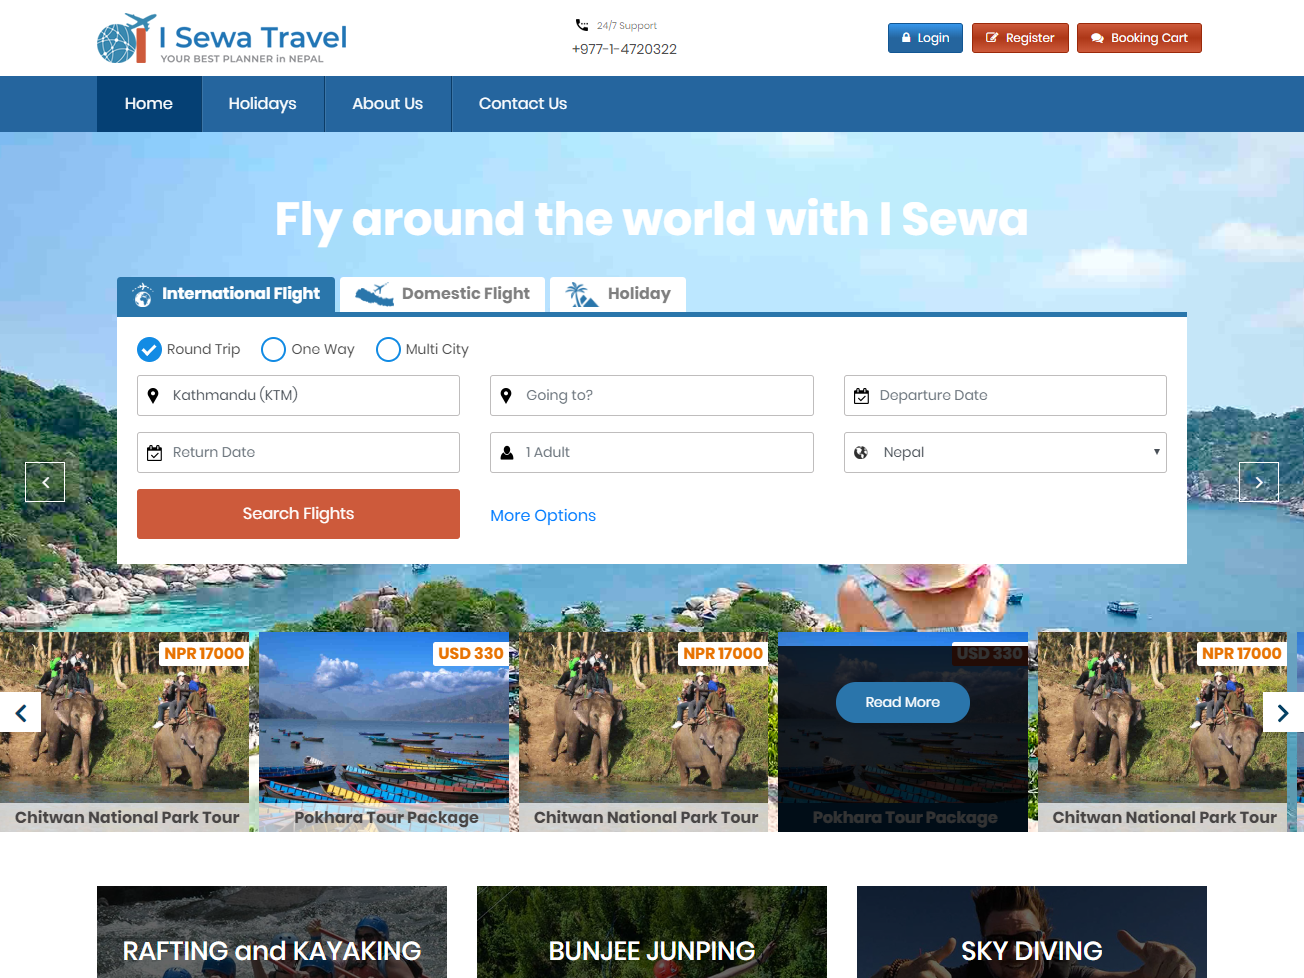 I-Sewa-Travel Sasto-Online-Air-Ticketing-Service-in-Nepal